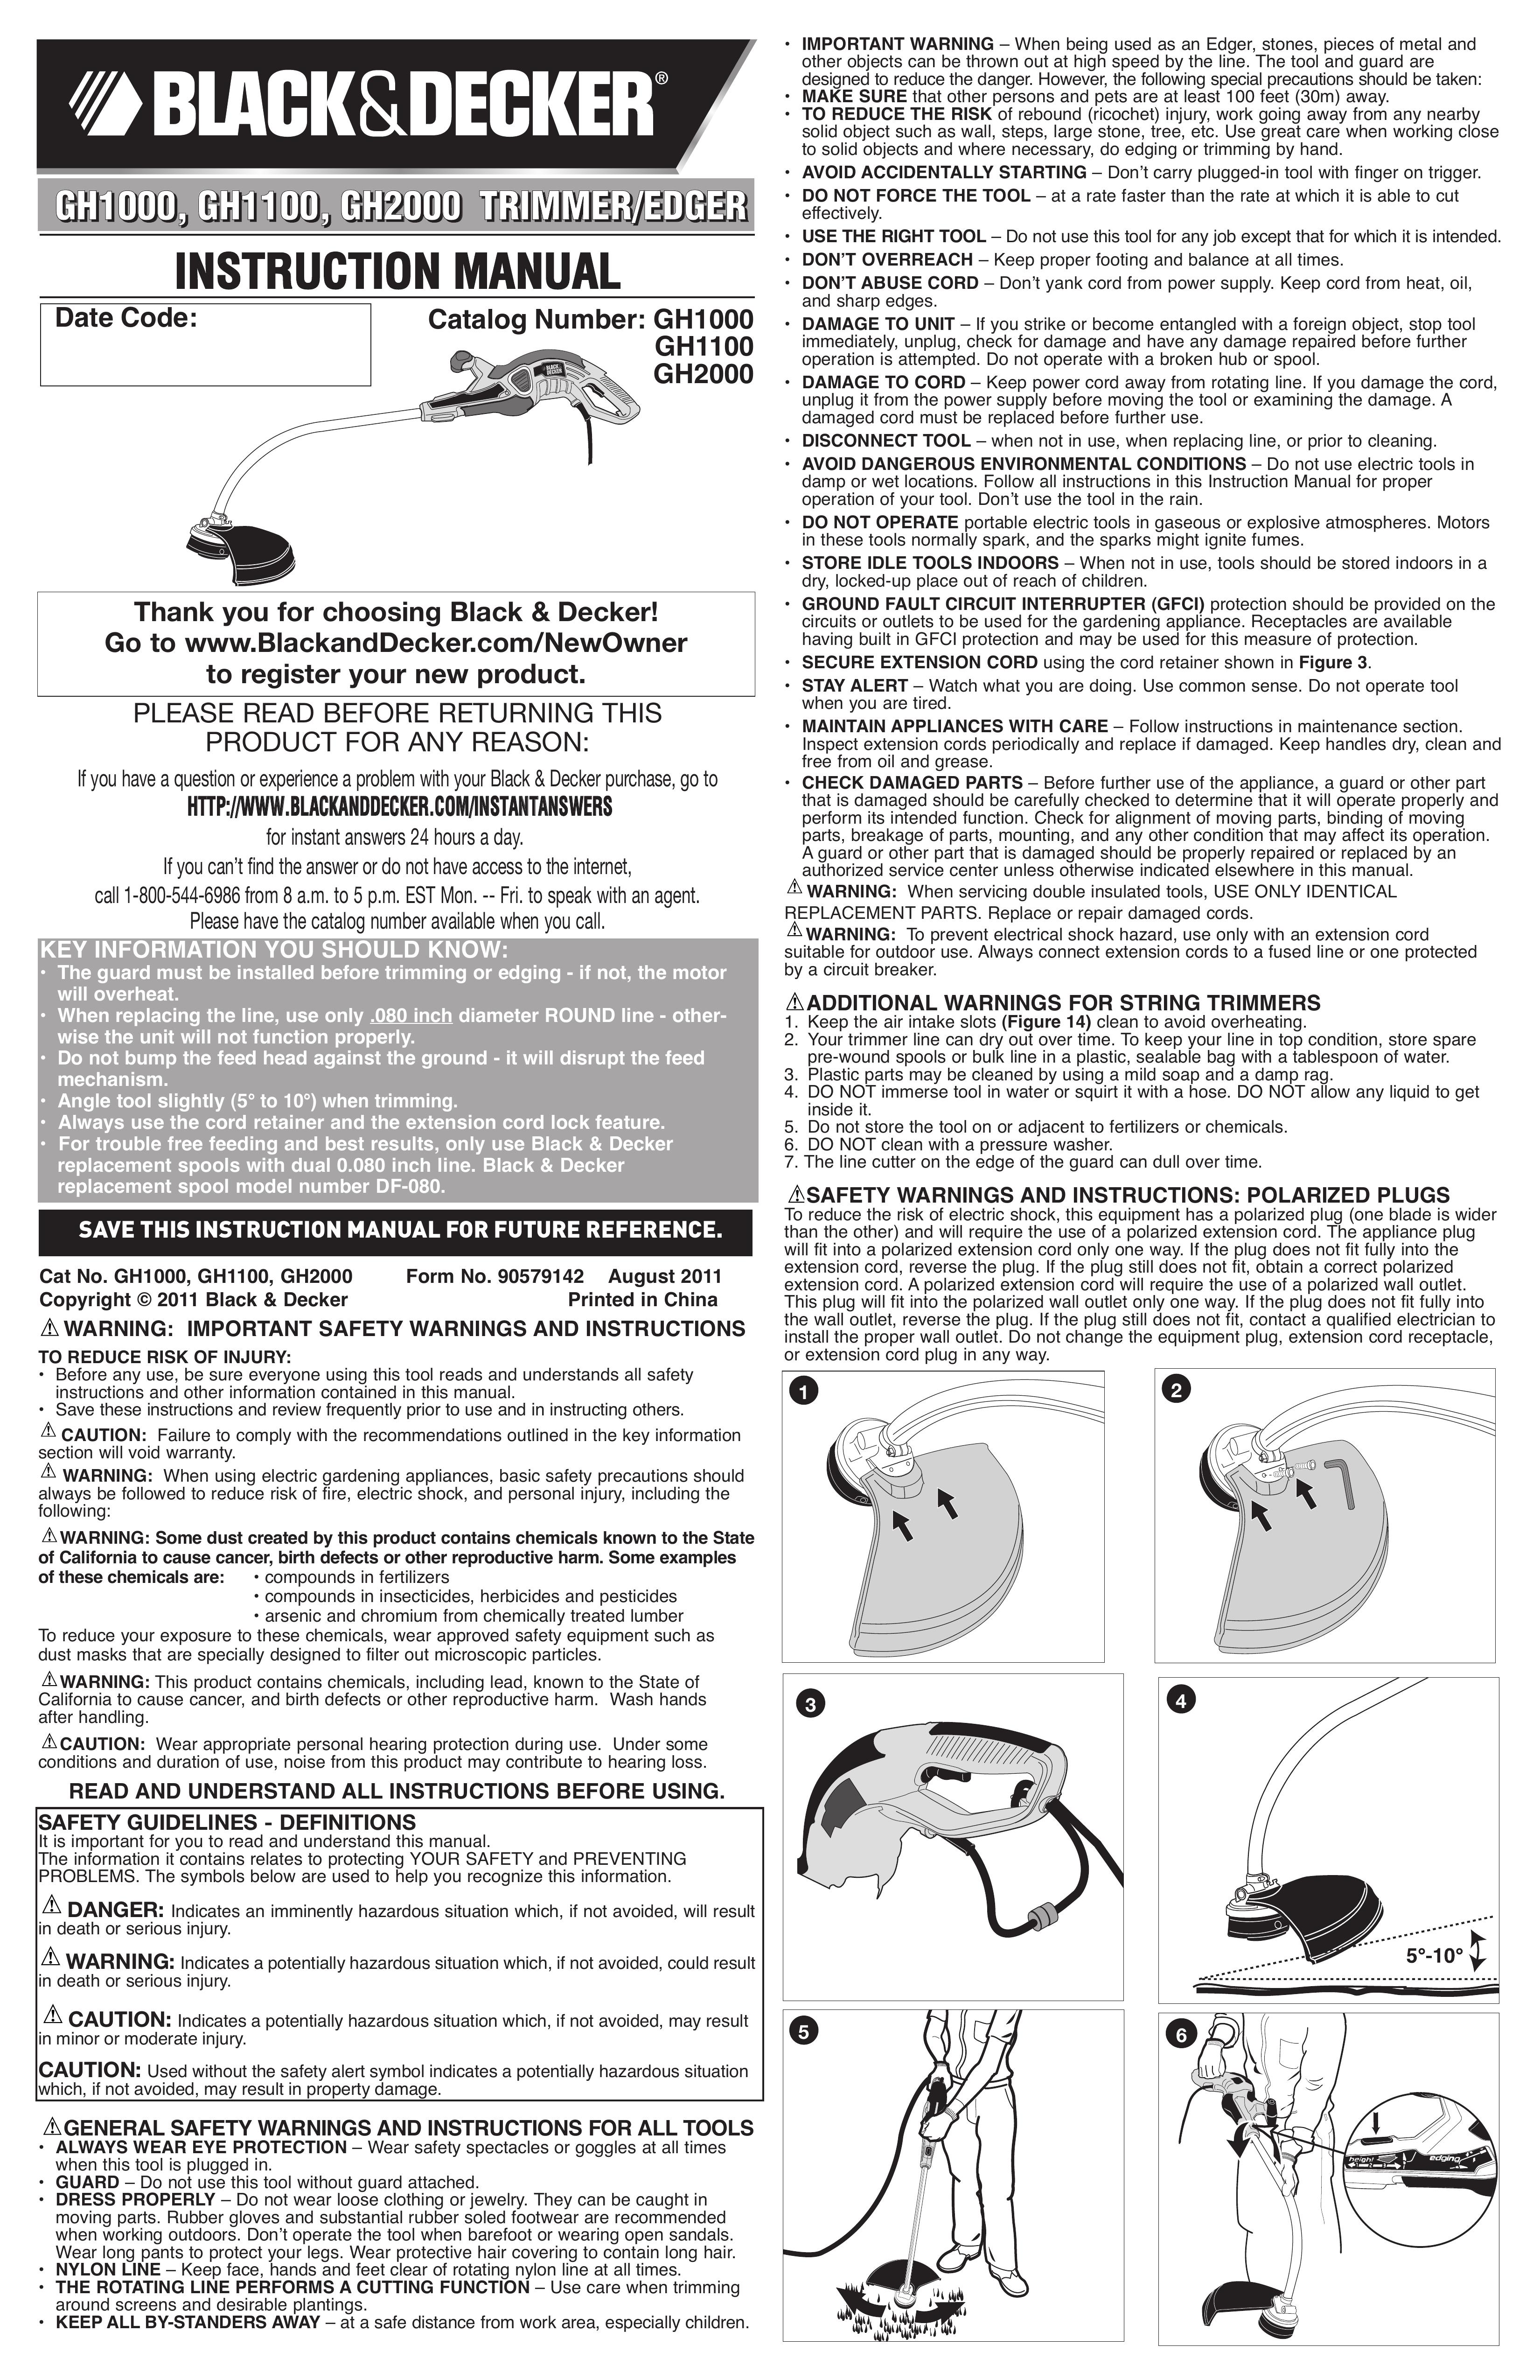 Black & Decker GH2000 Edger User Manual